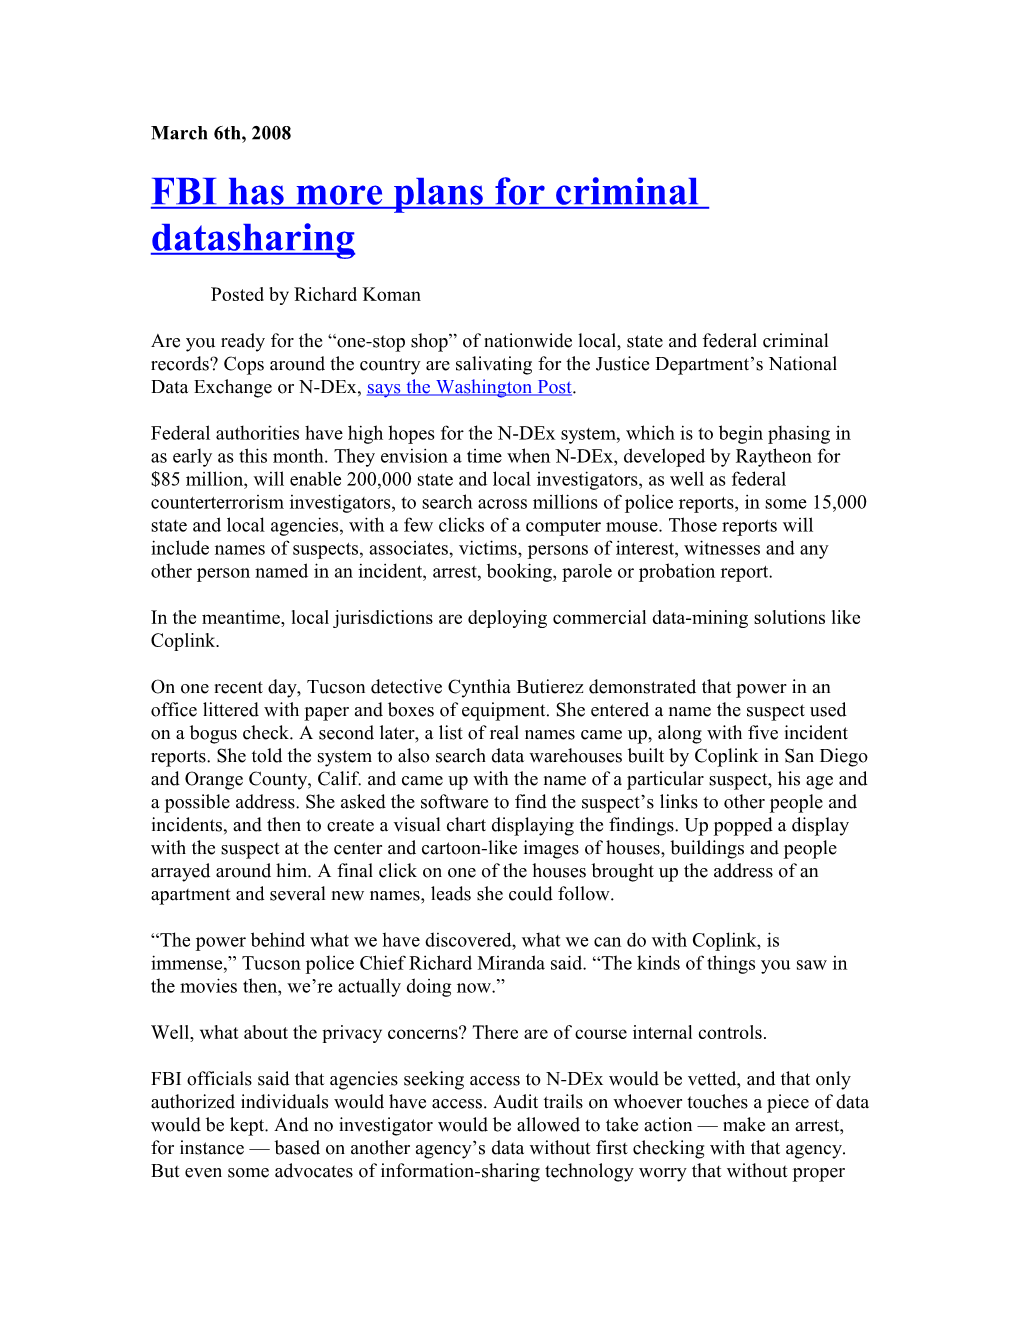 FBI Has More Plans for Criminal Datasharing